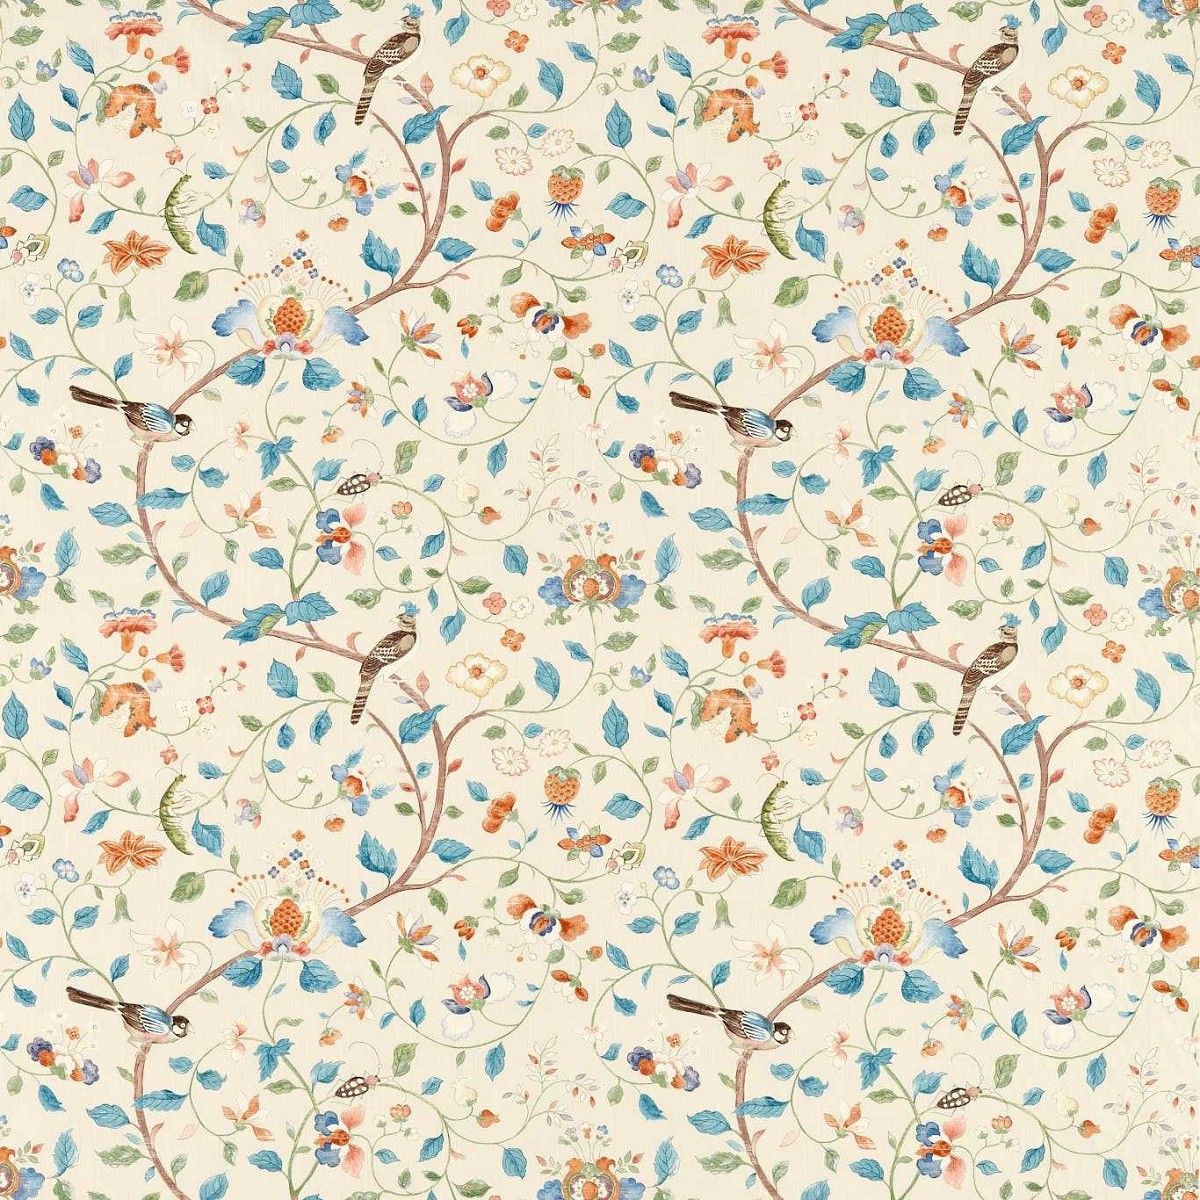 Arils Garden Teal/Russet Fabric by Sanderson